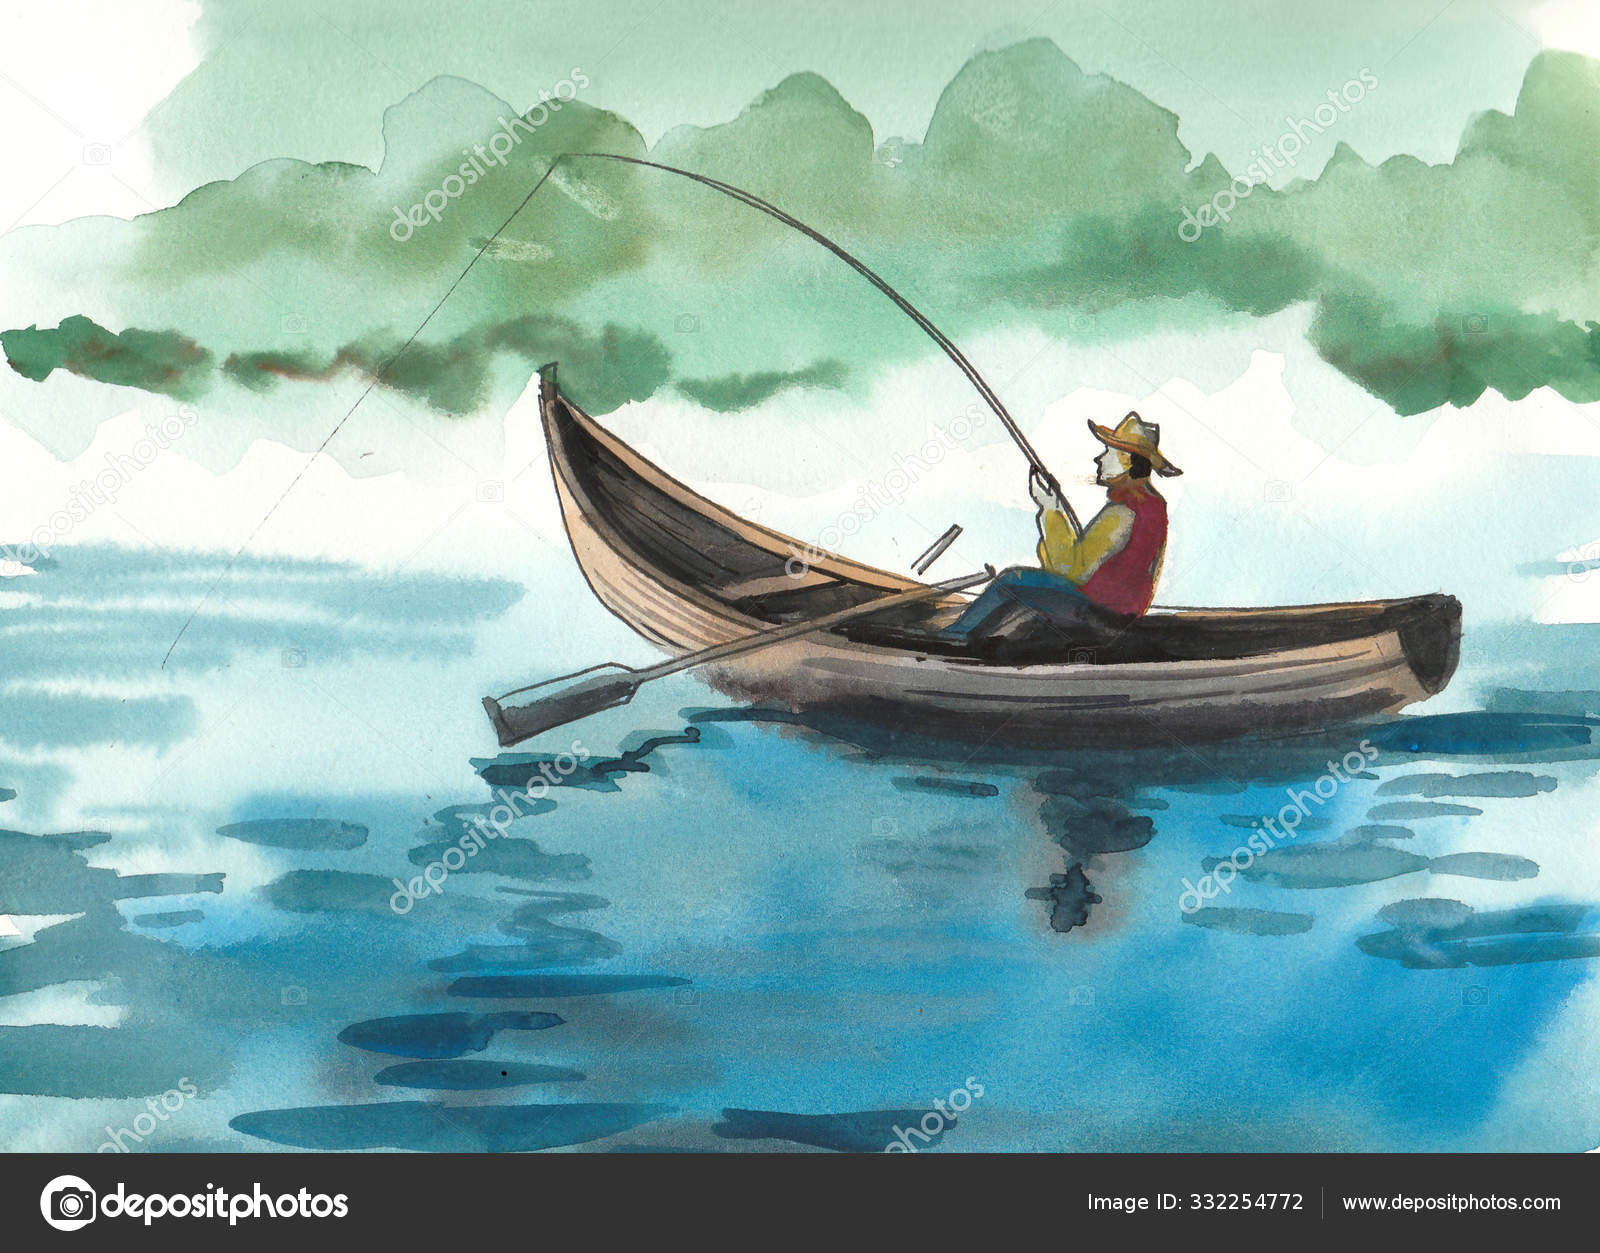 Man Boat Fishing Rod Ink Watercolor Drawing Stock Photo by ©alexblacksea  332254772